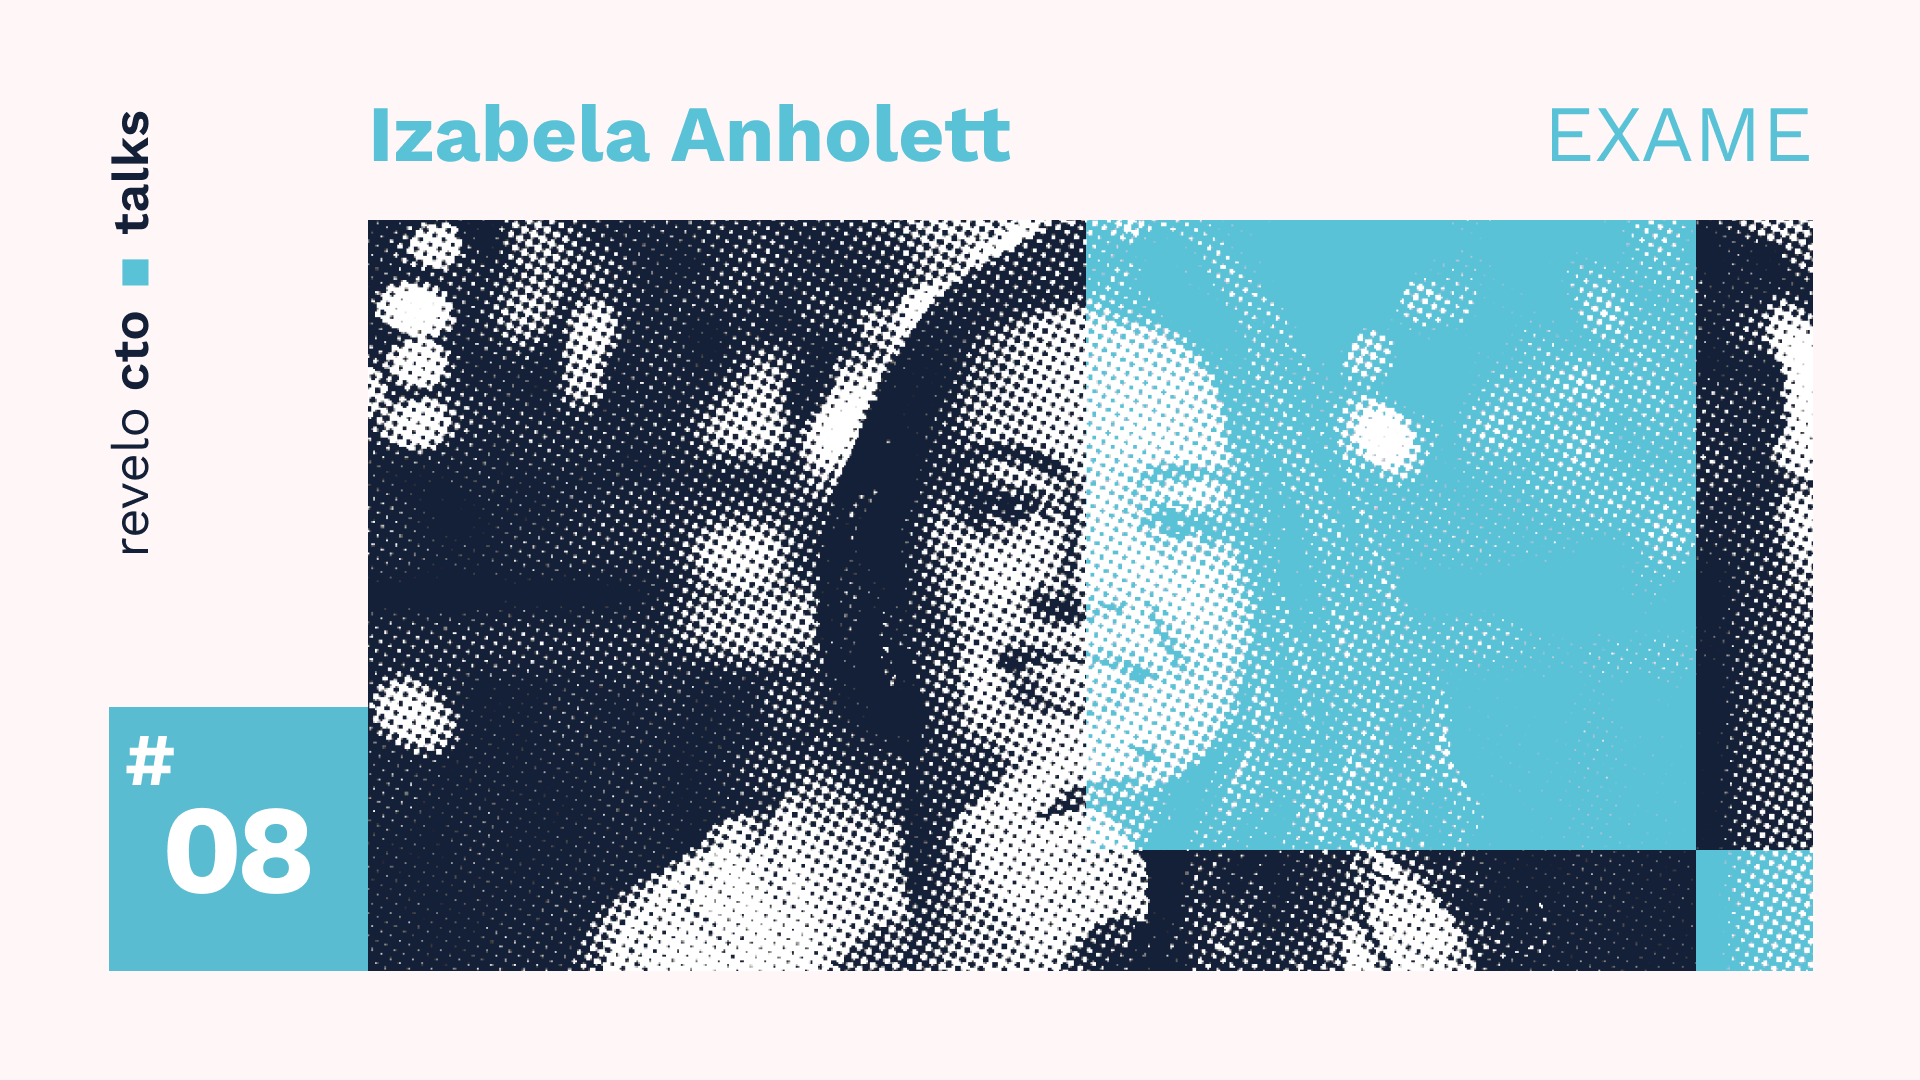 [VIDEO] CTO Talks #08 - Izabela Anholett: "Siempre quise ser ejecutiva"